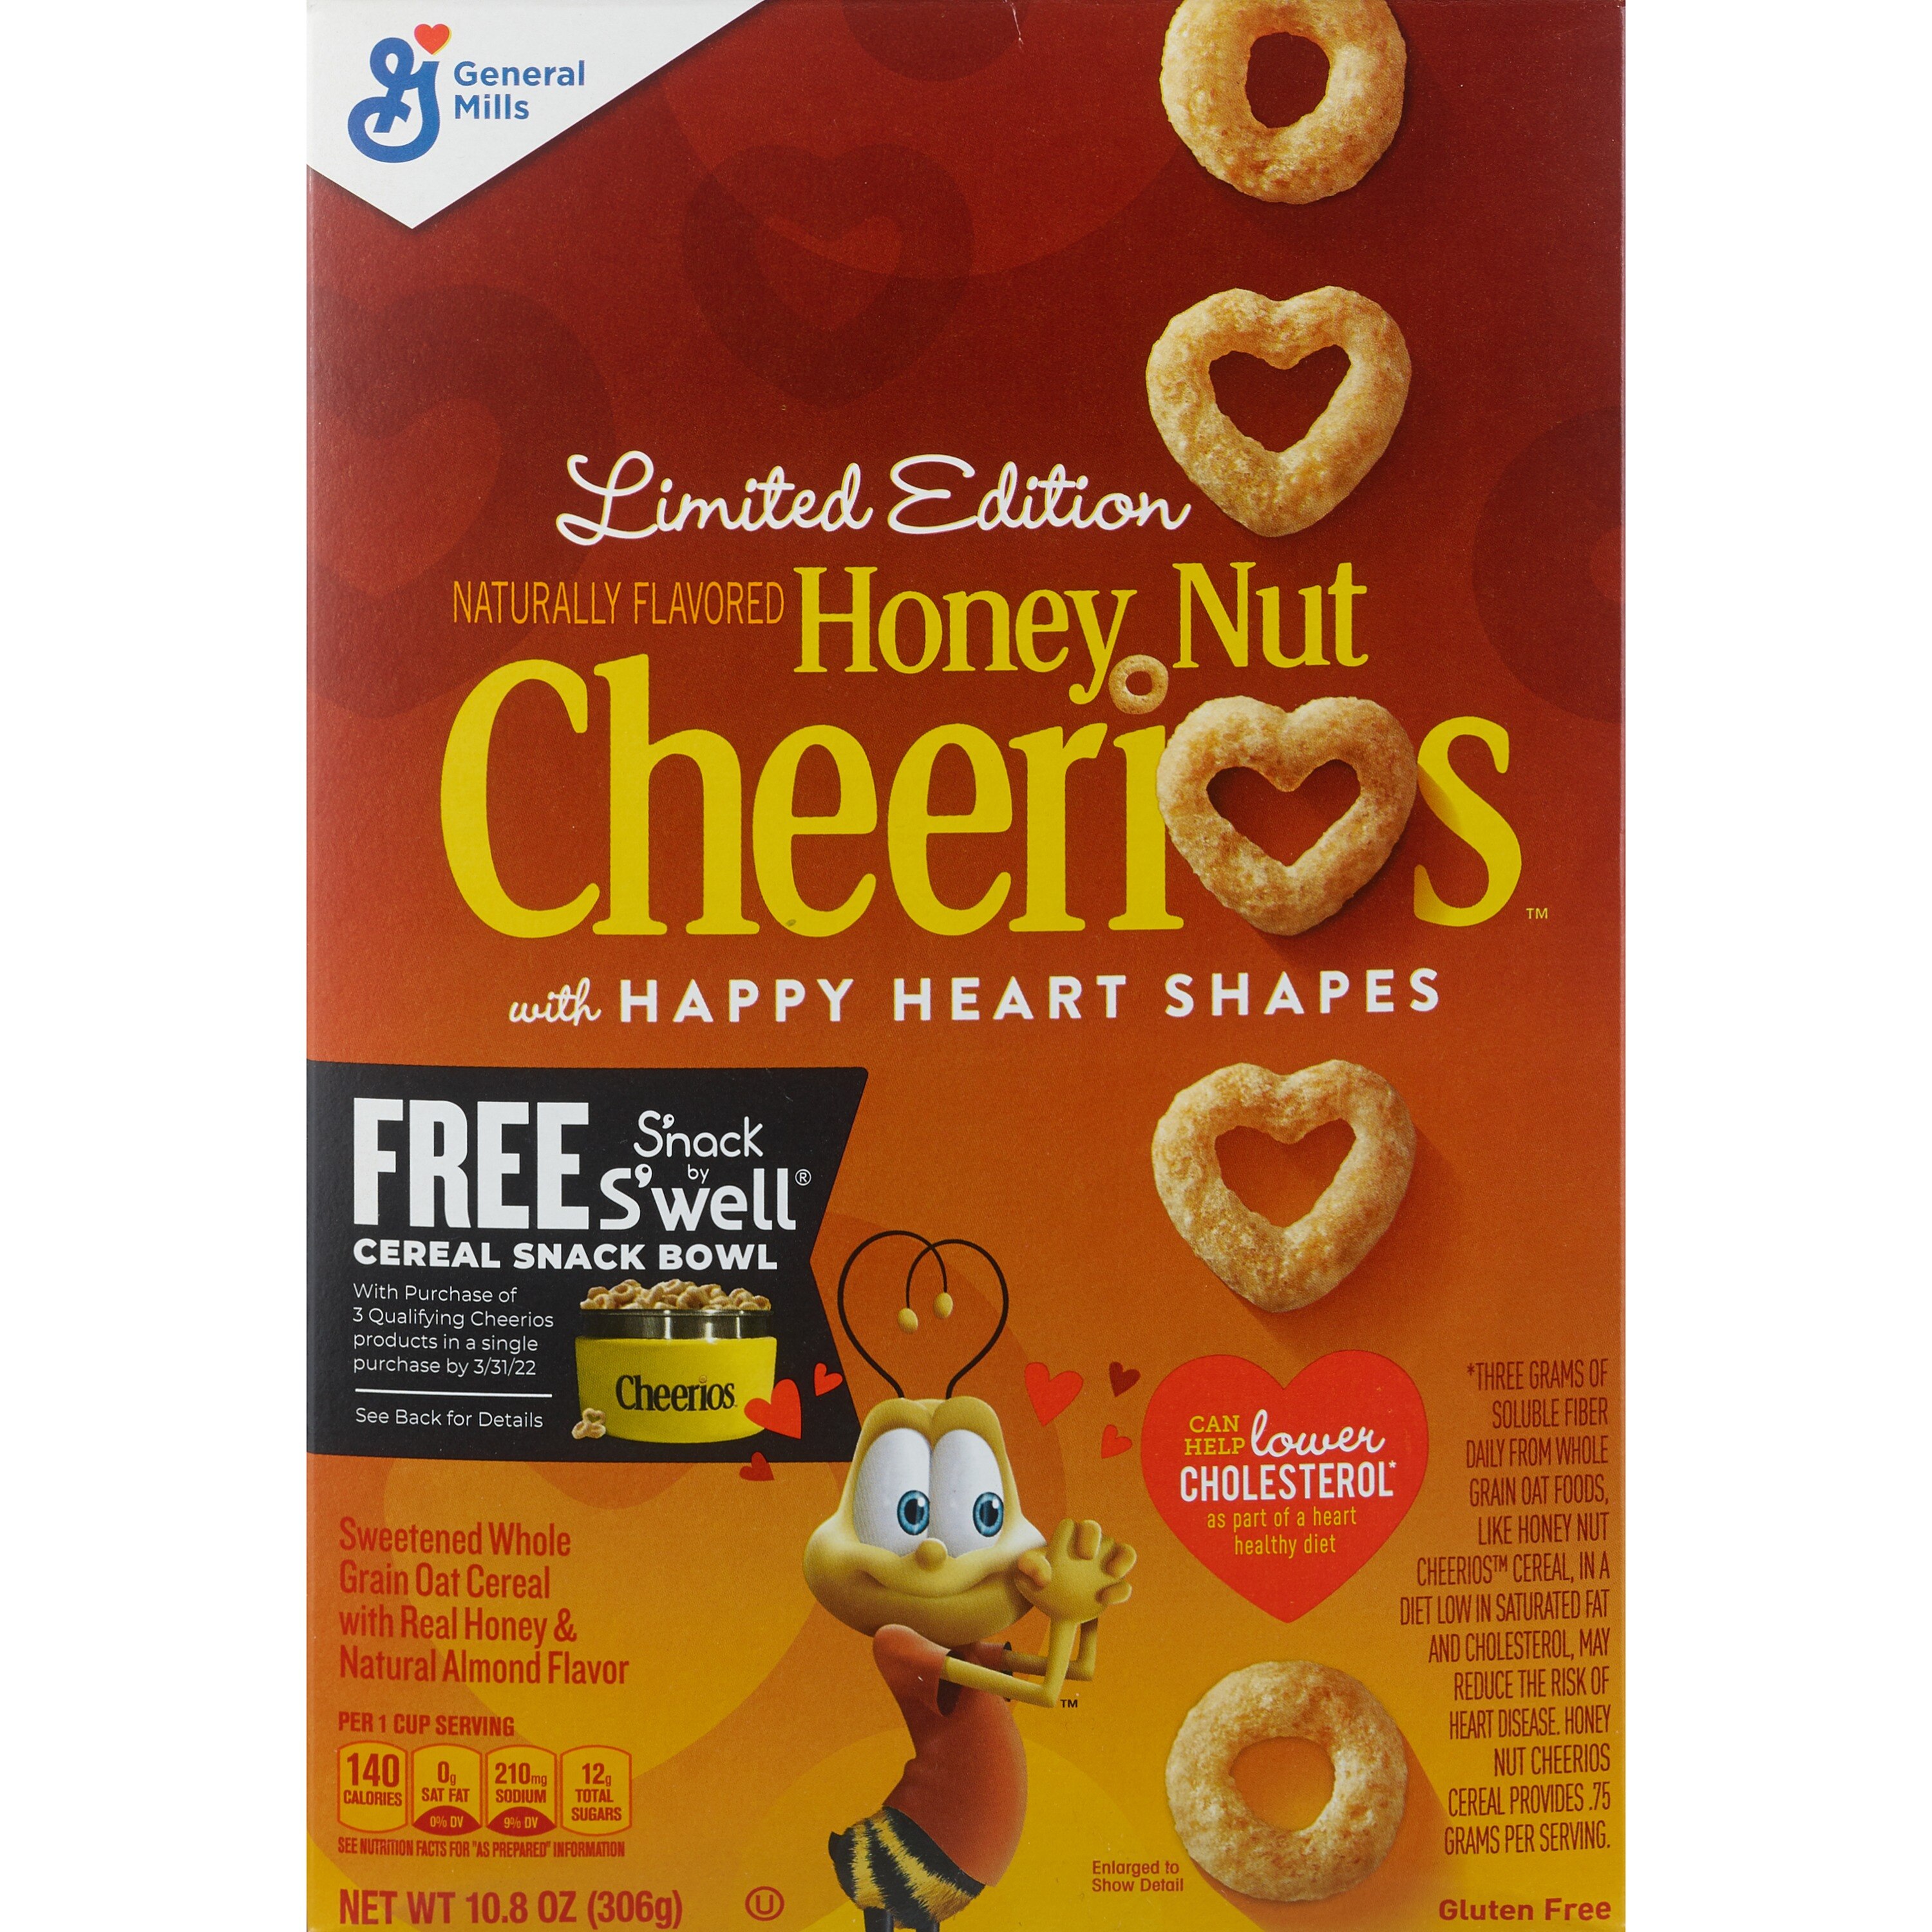 Cheerios Honey Nut Cereal